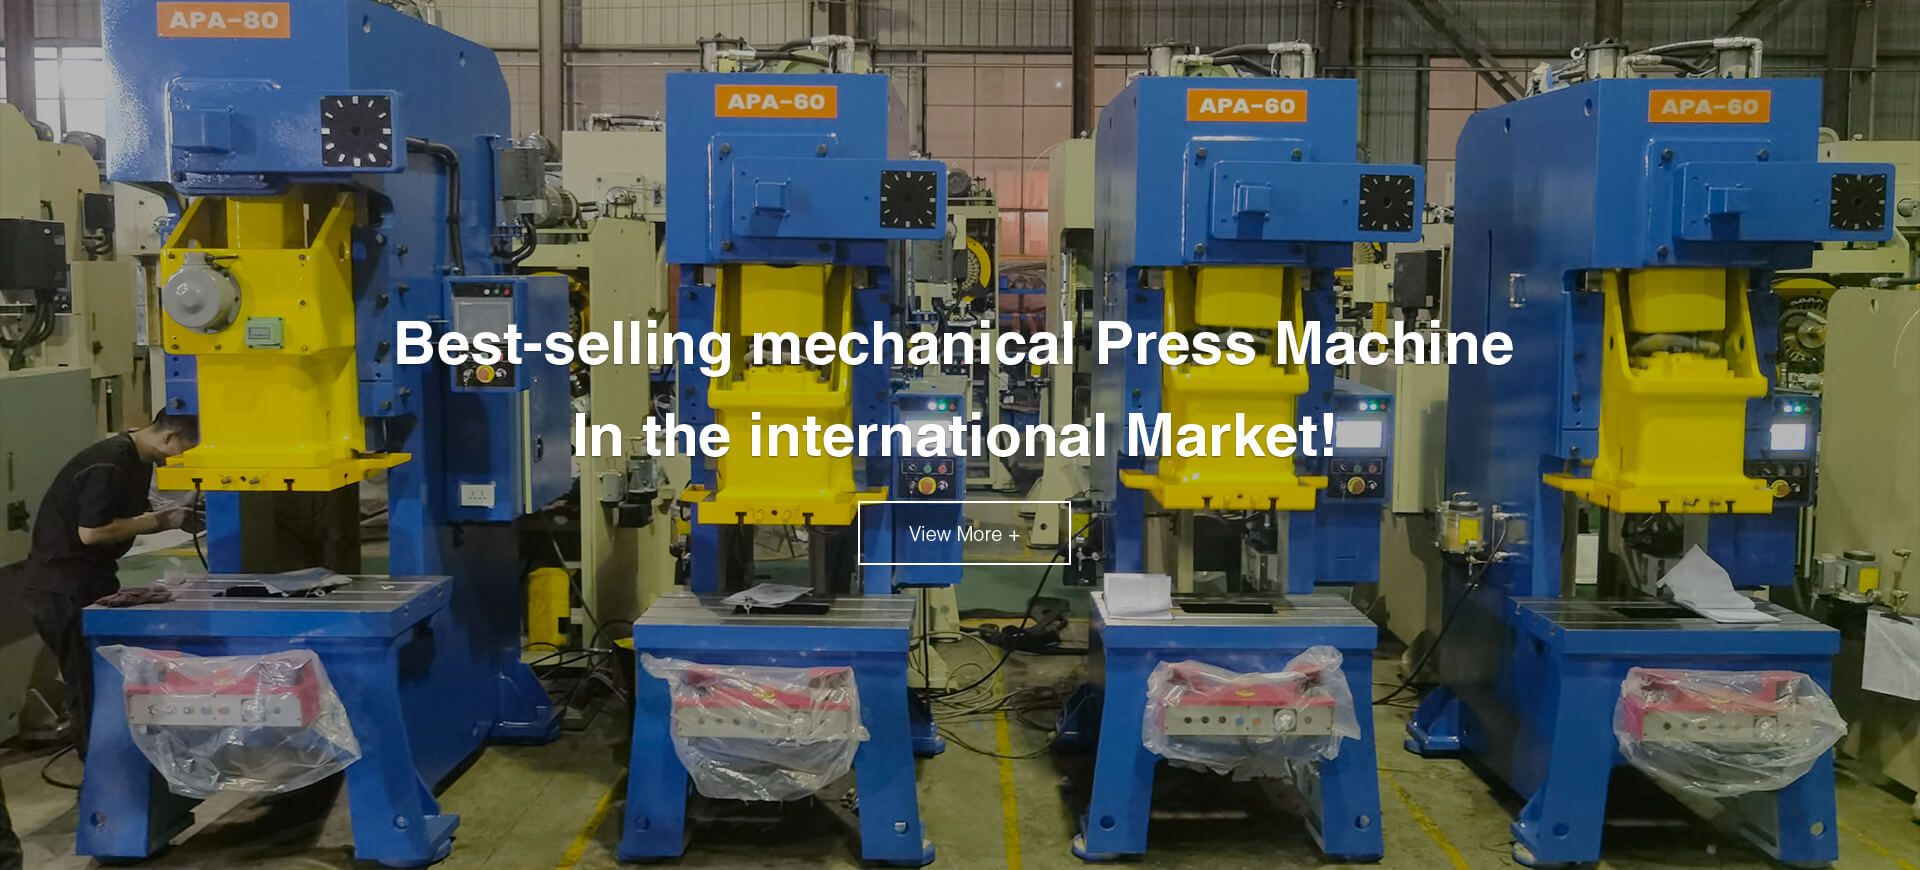 Best-selling mechanical Press Machine In the International Market!